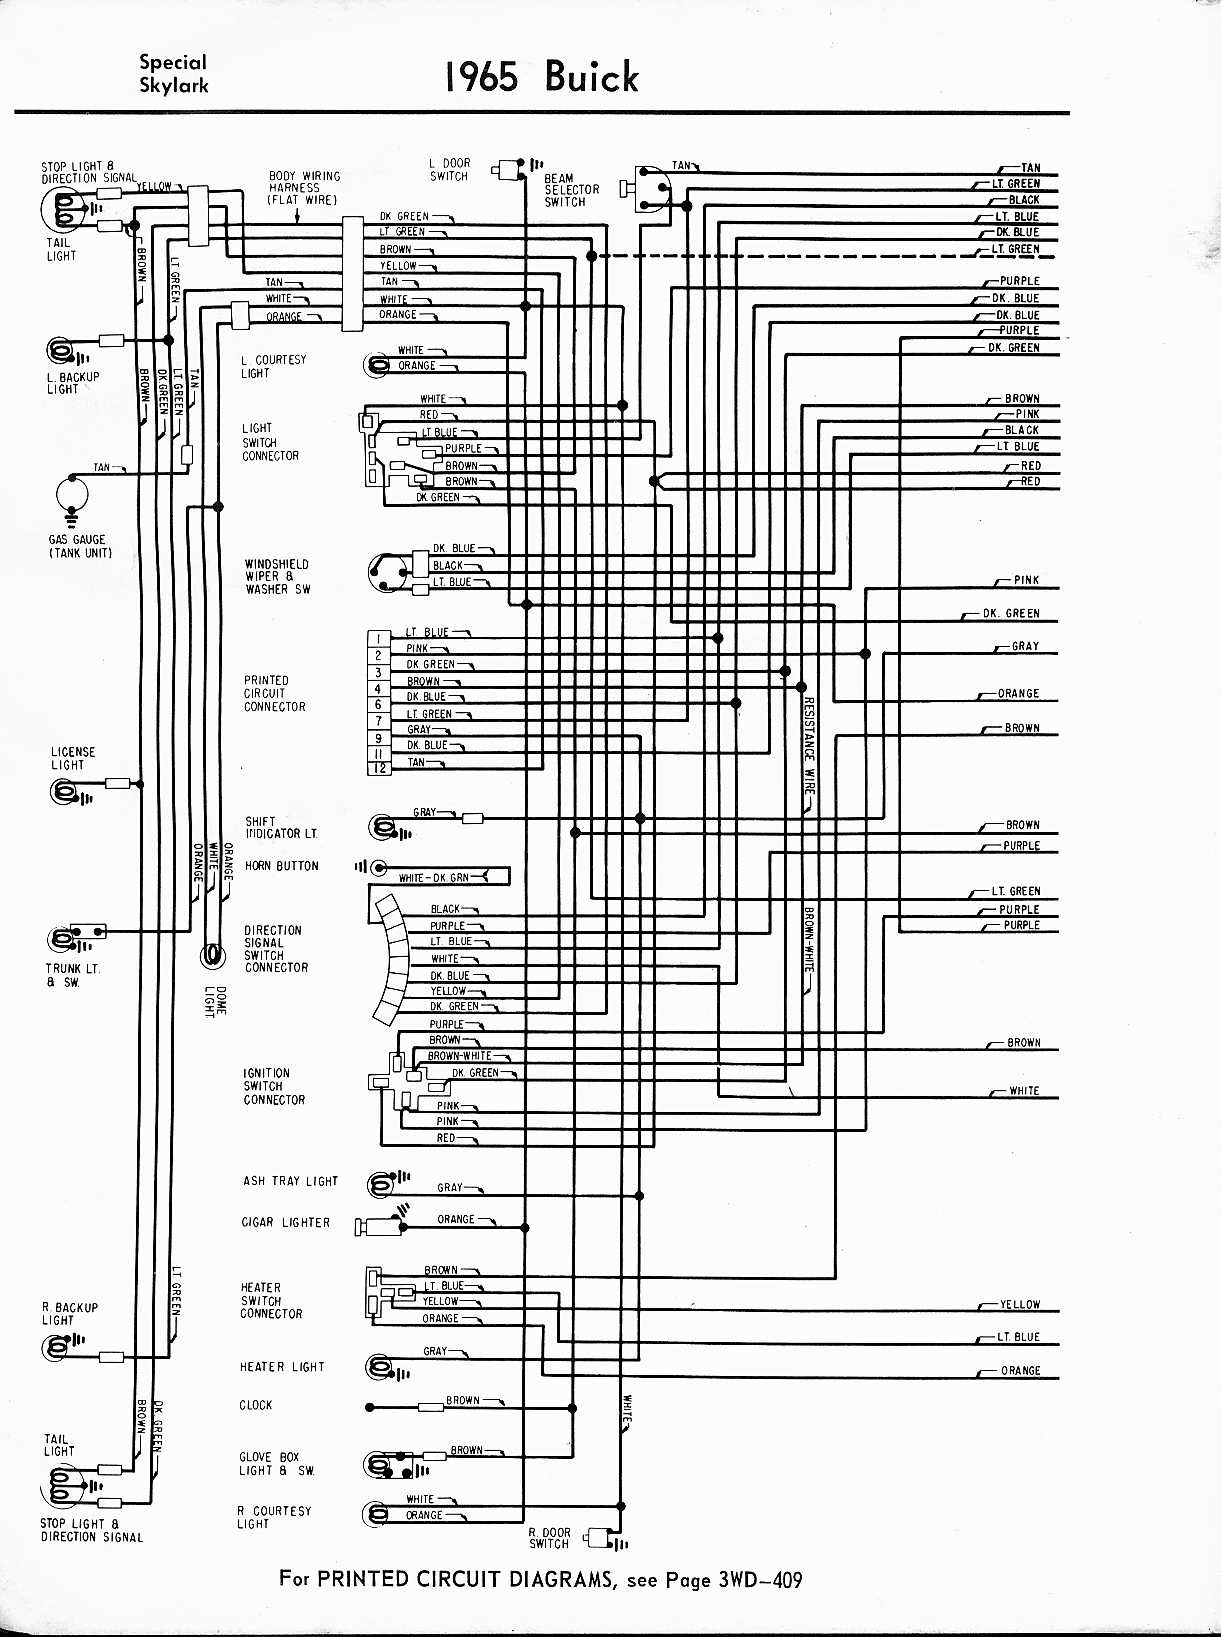 1965 Skylark LQ9 Retrofit / Swap - Build Thread - Page 10 ... renault laguna headlight wiring diagram 